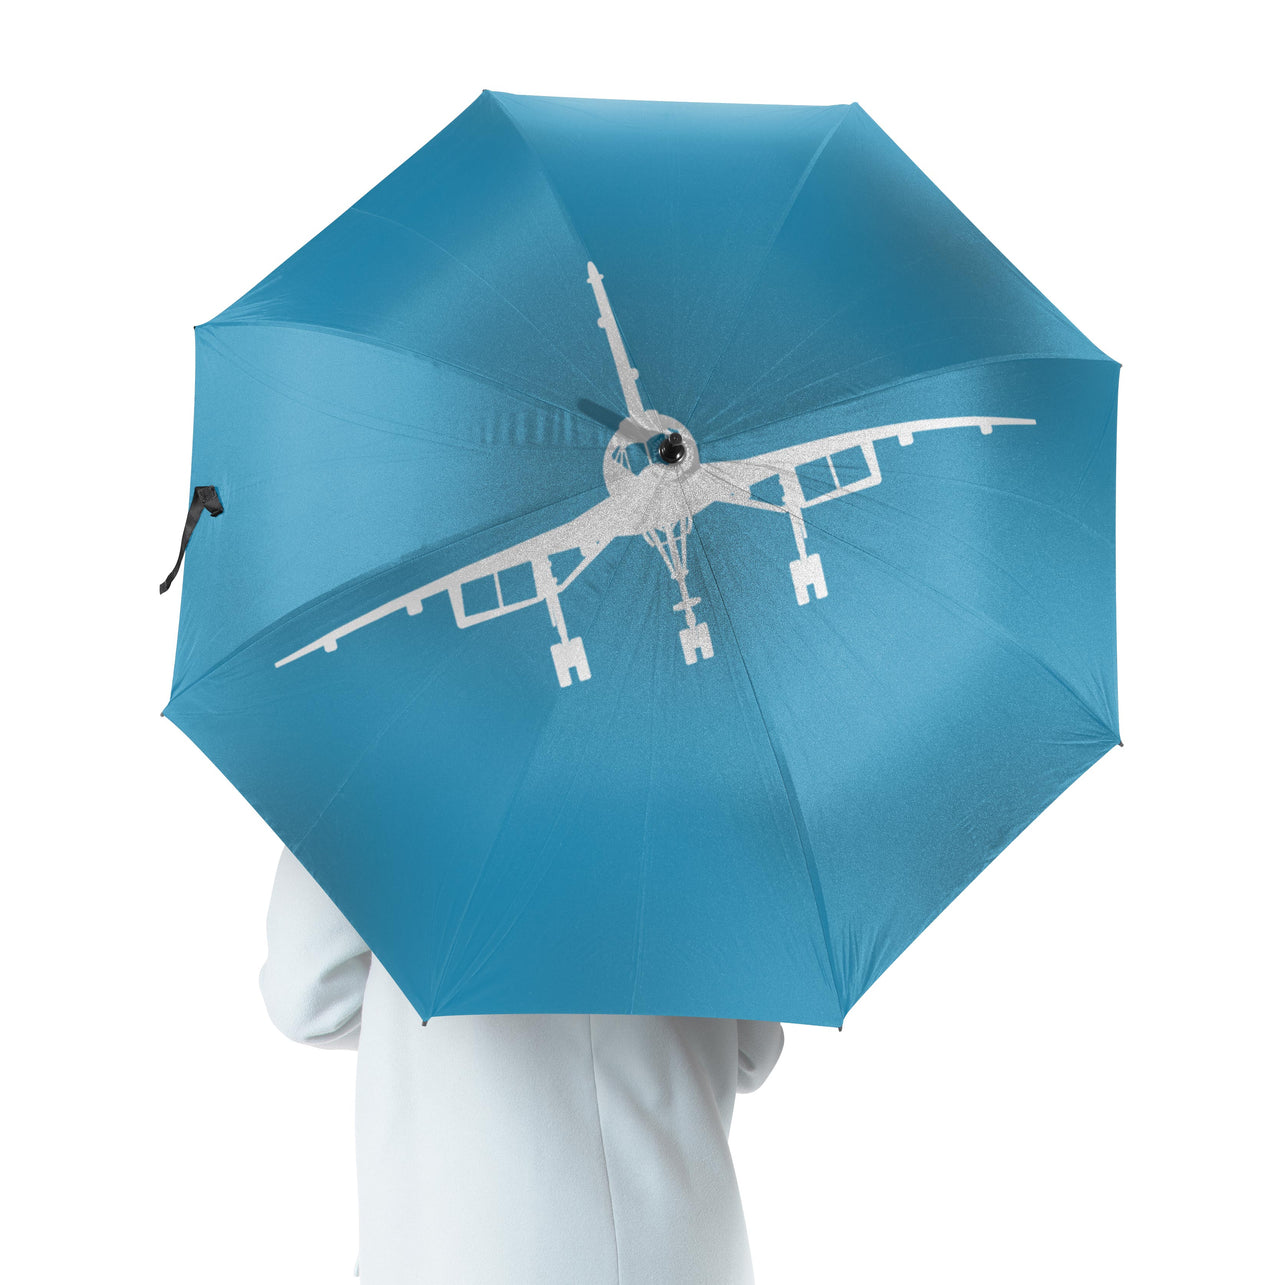 Concorde Silhouette Designed Umbrella